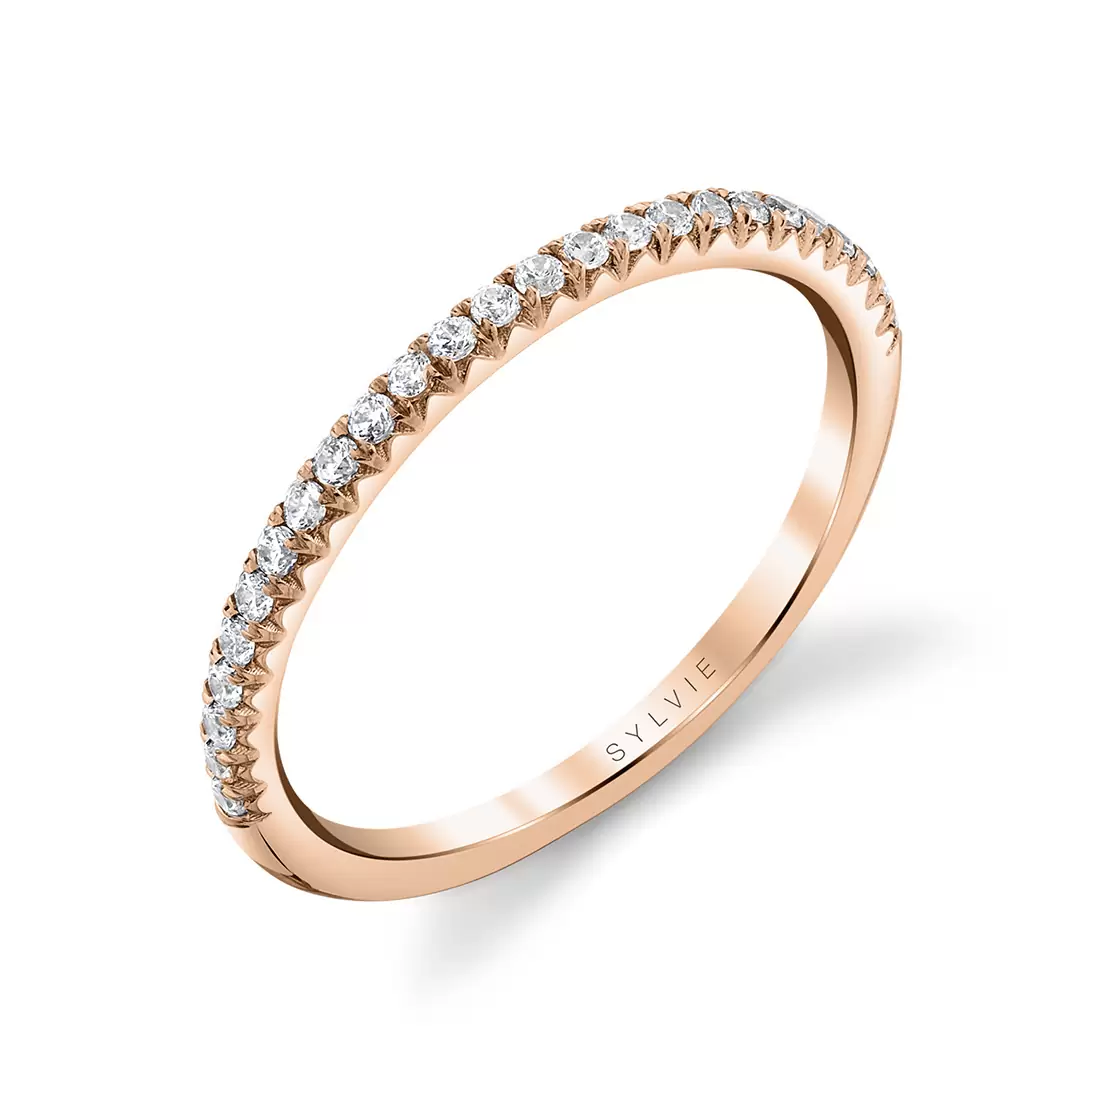 Rose gold, diamond classic wedding ring.